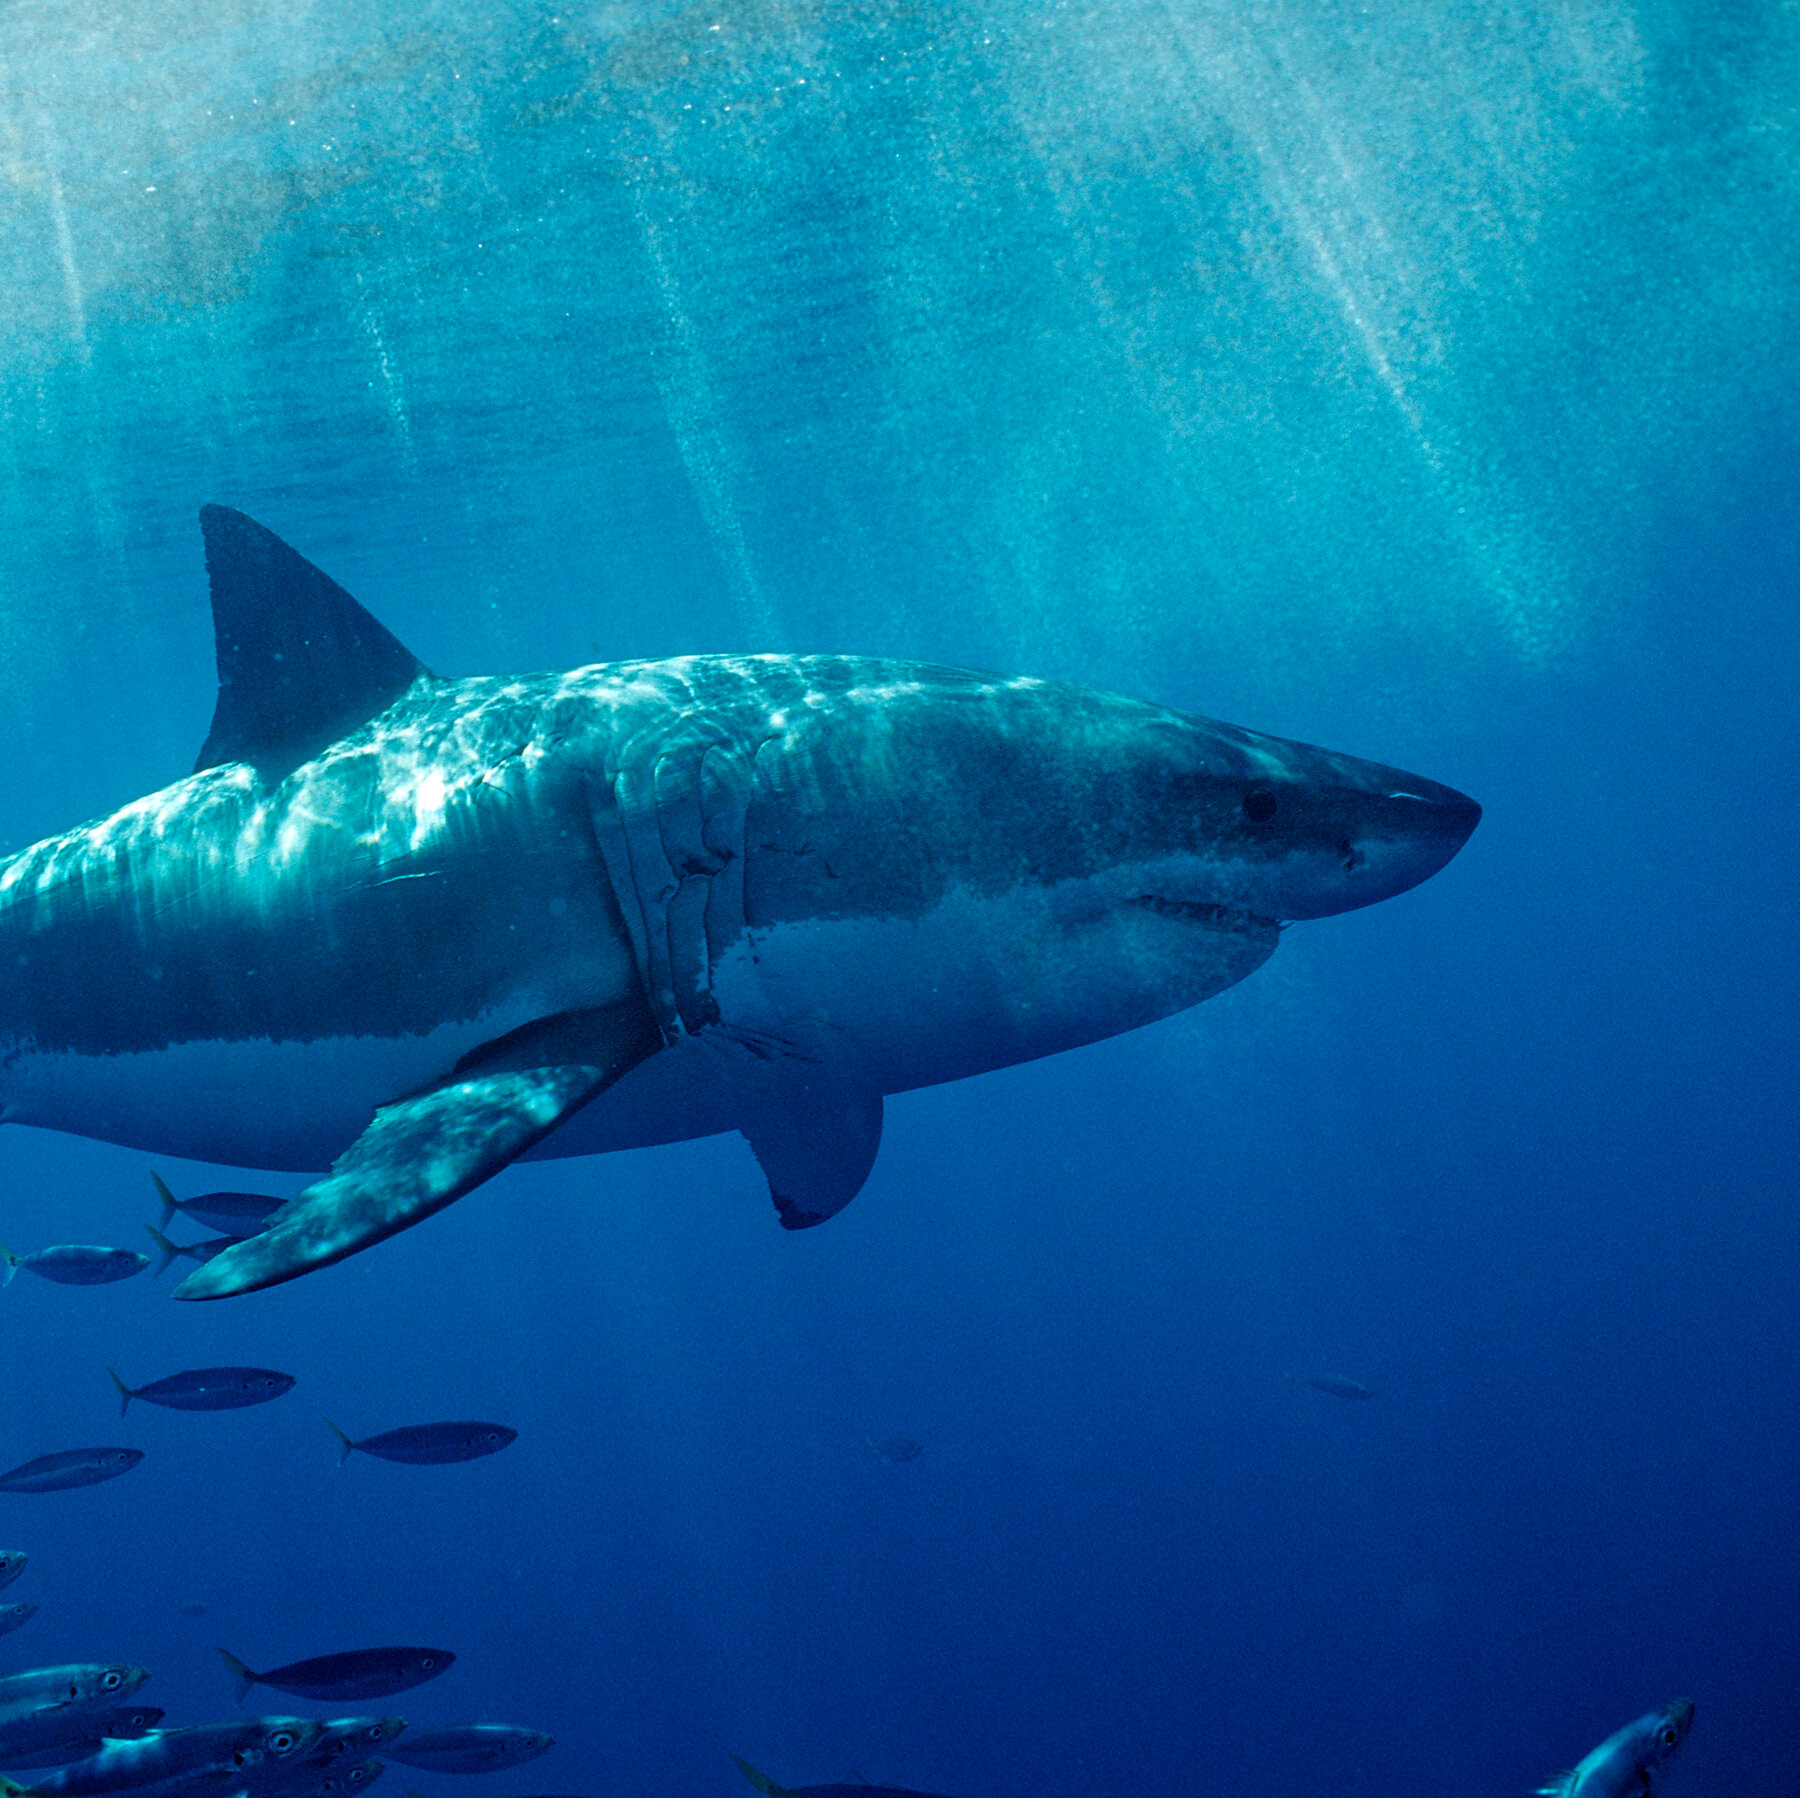 Detail Image Of A Shark Nomer 52